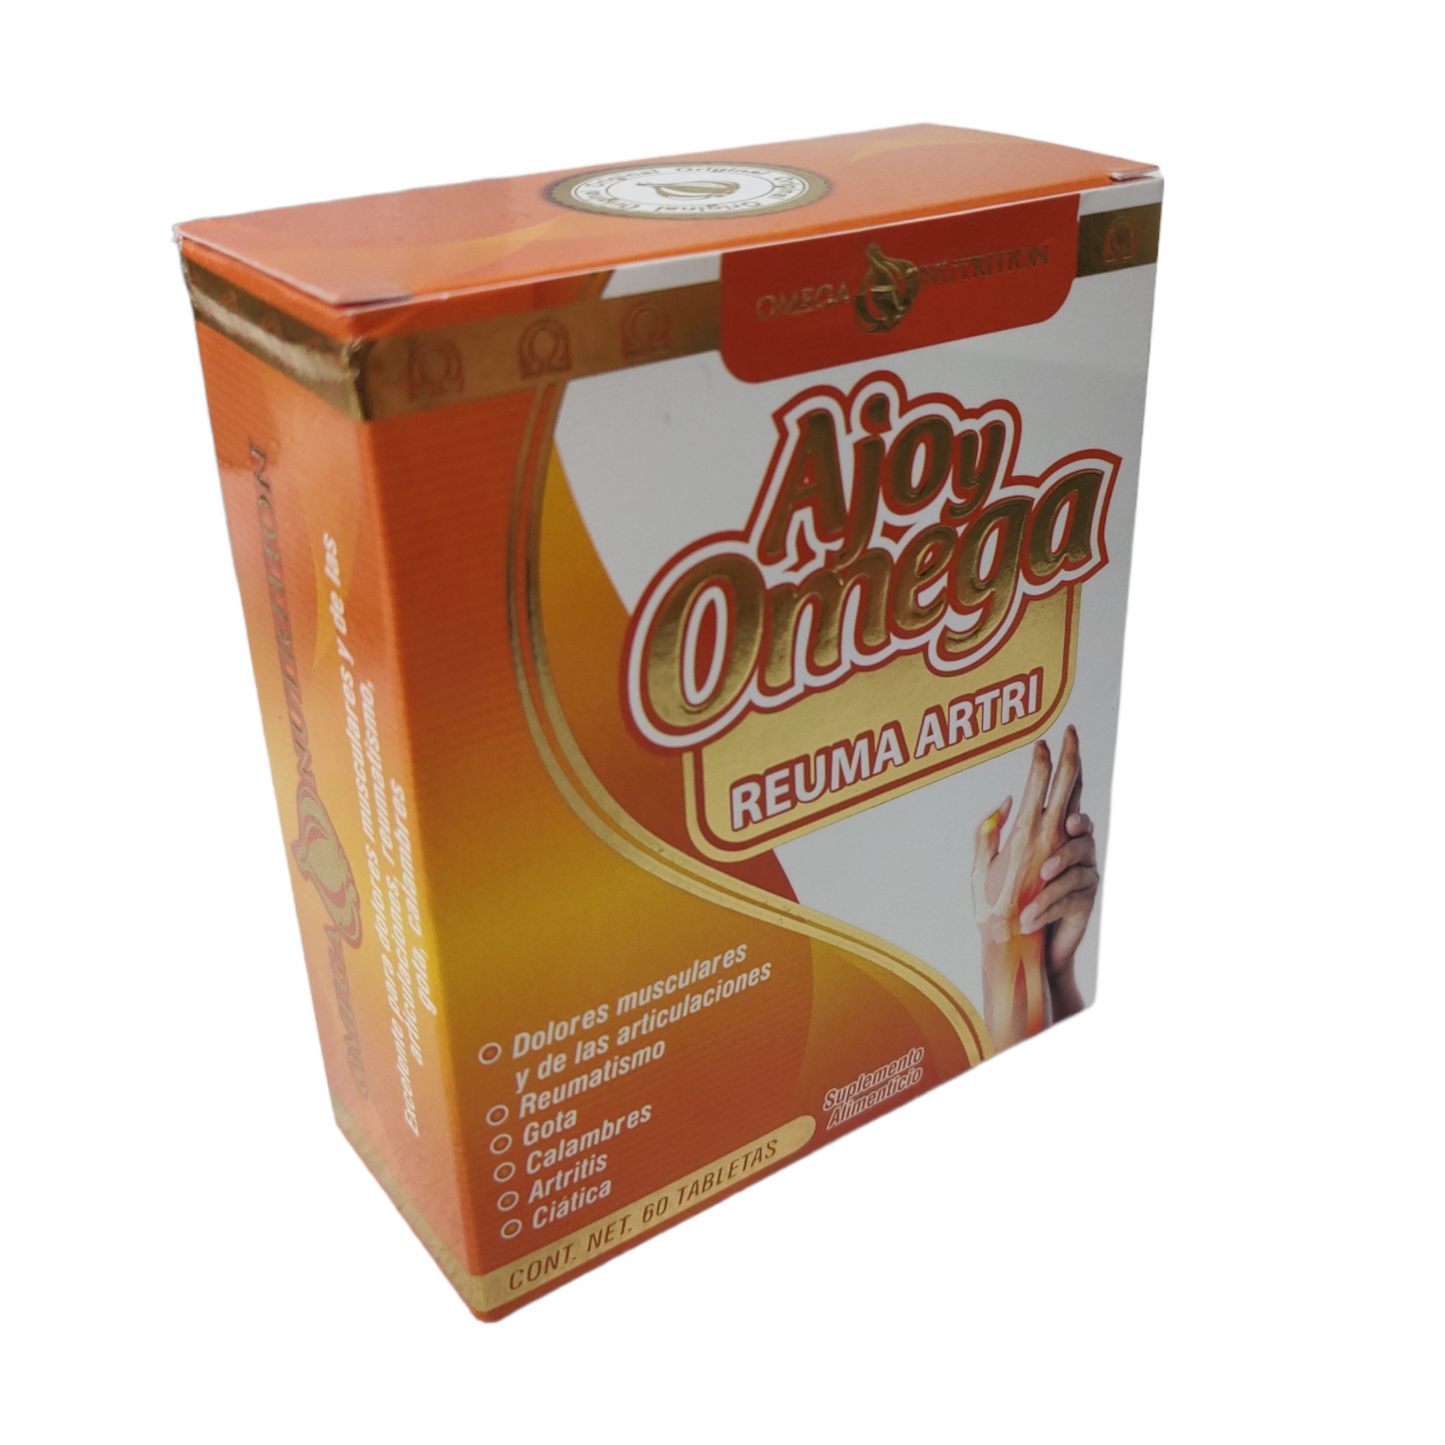 Ajo y Omega Reuma Artri 60 tabletas Omega Nutrition